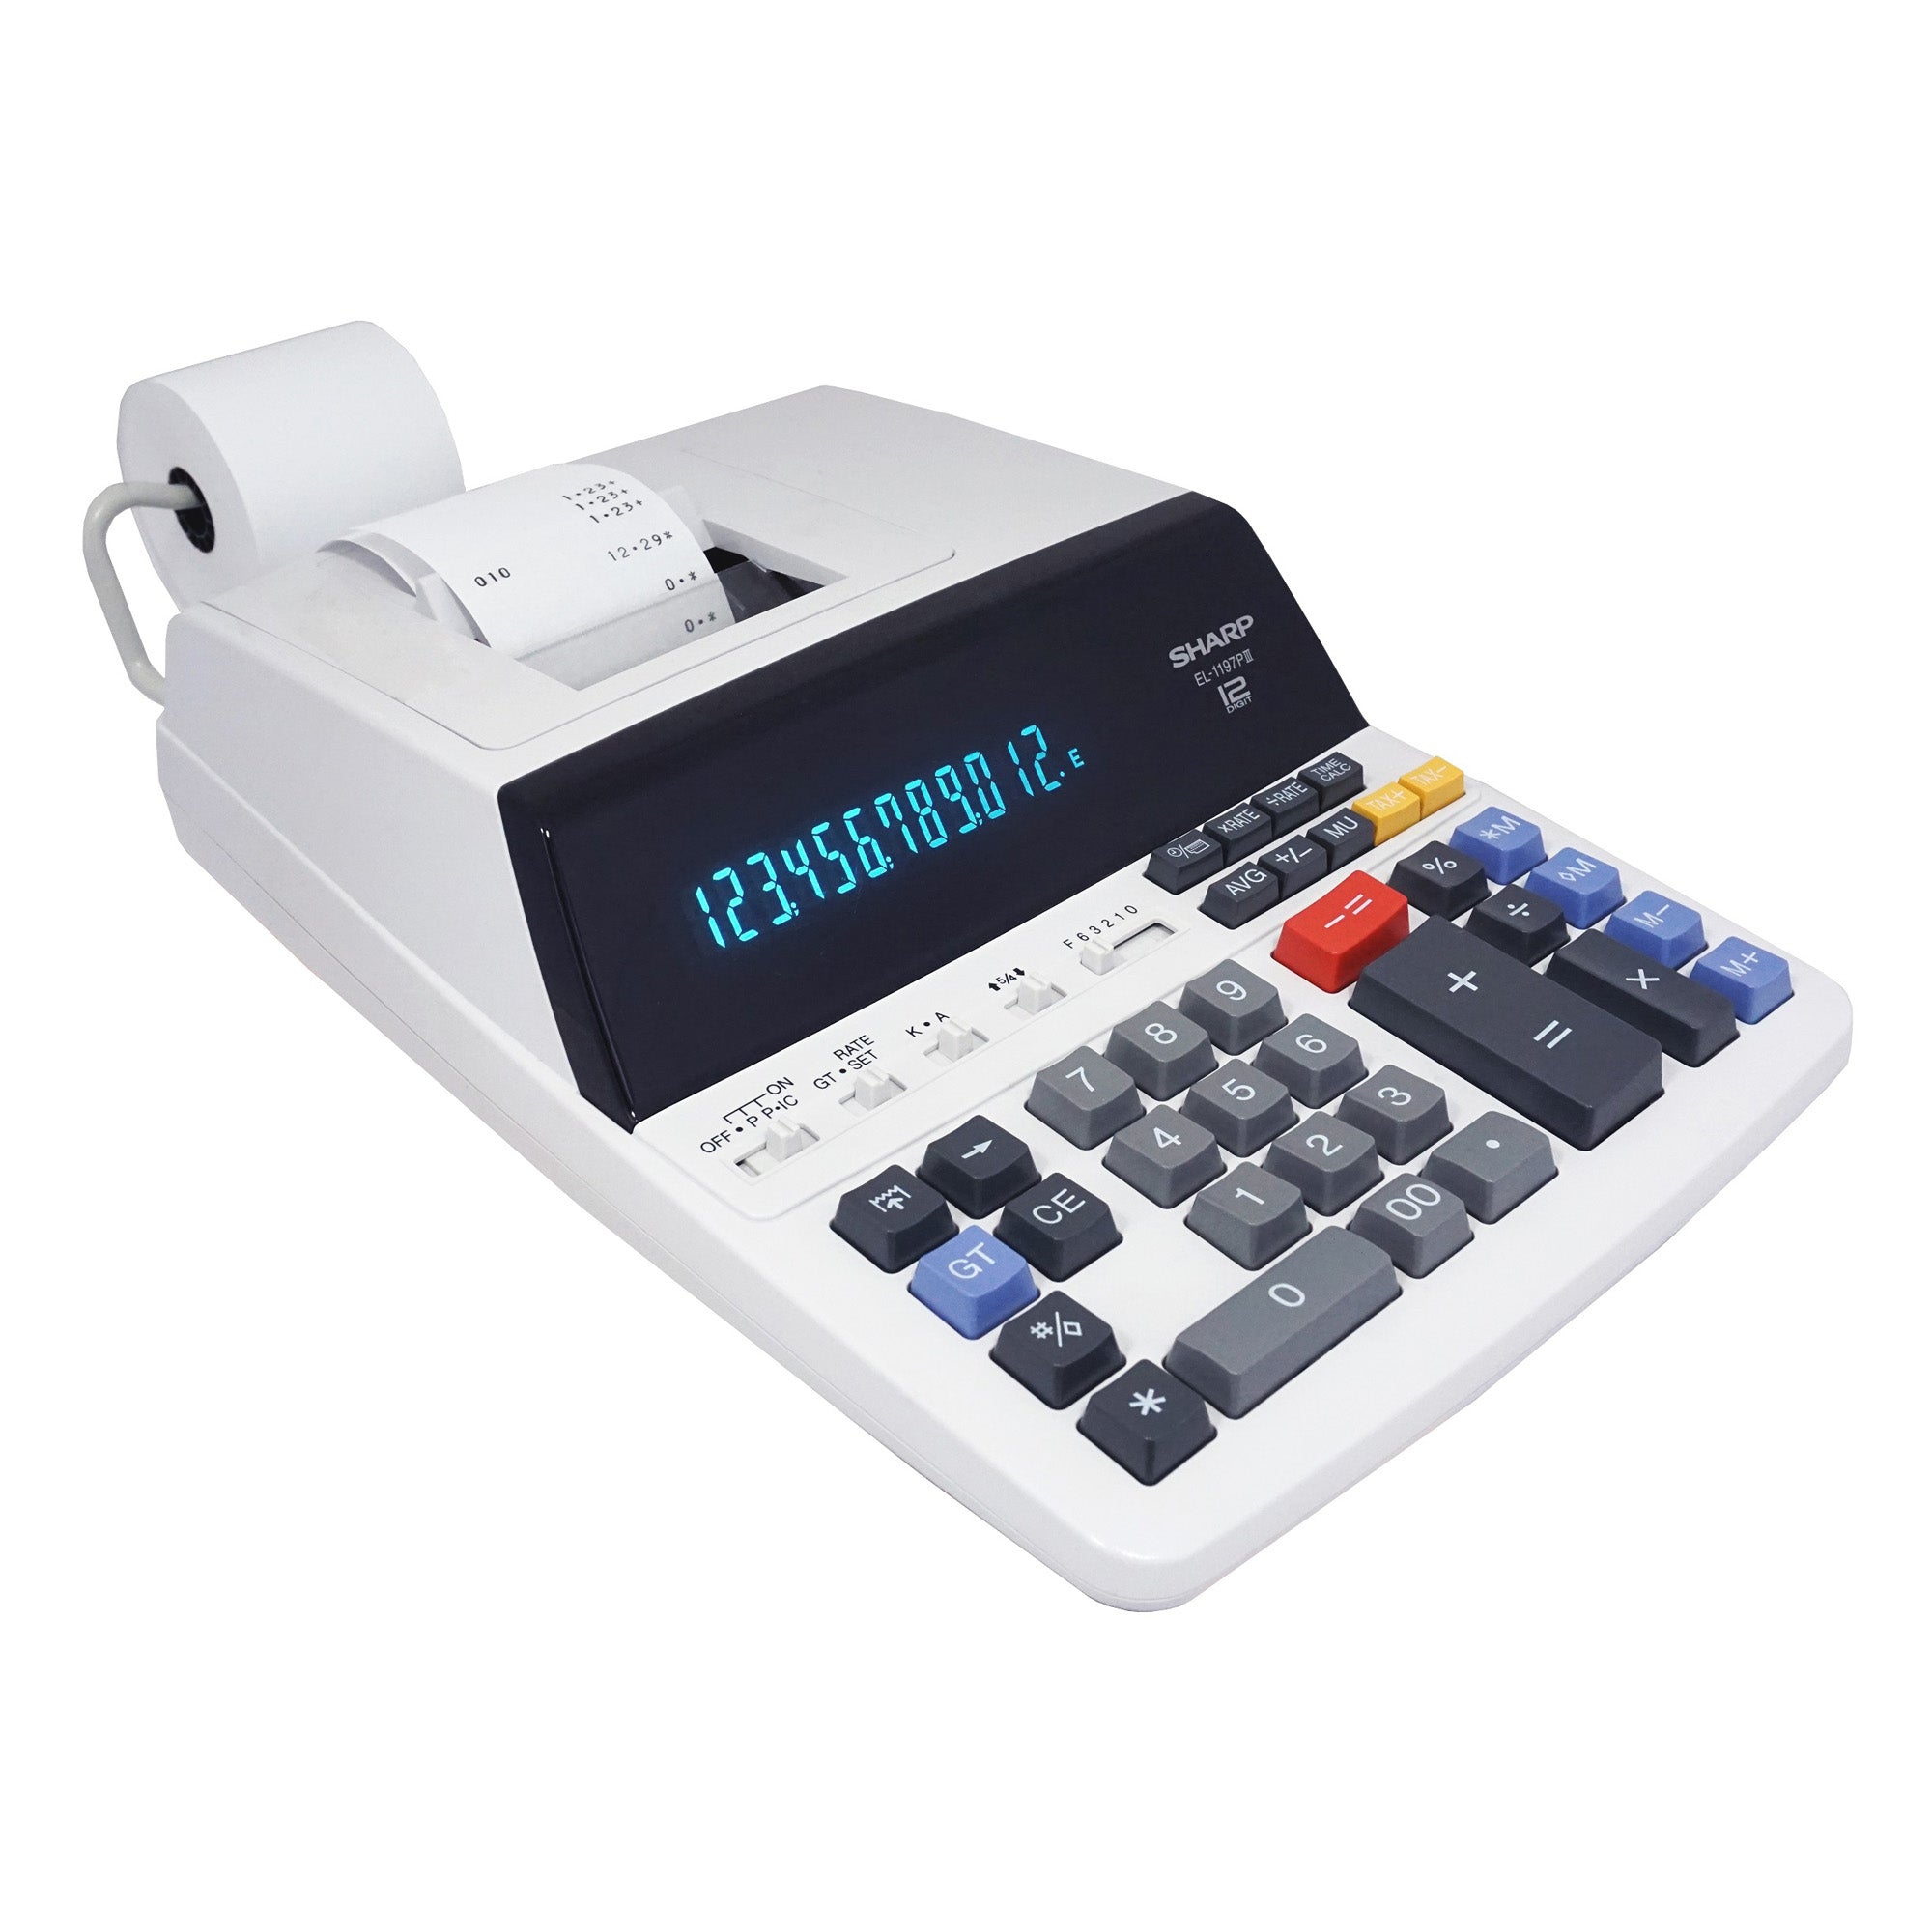 12 Digit Commercial Printing Calculator (EL-1197PIII)